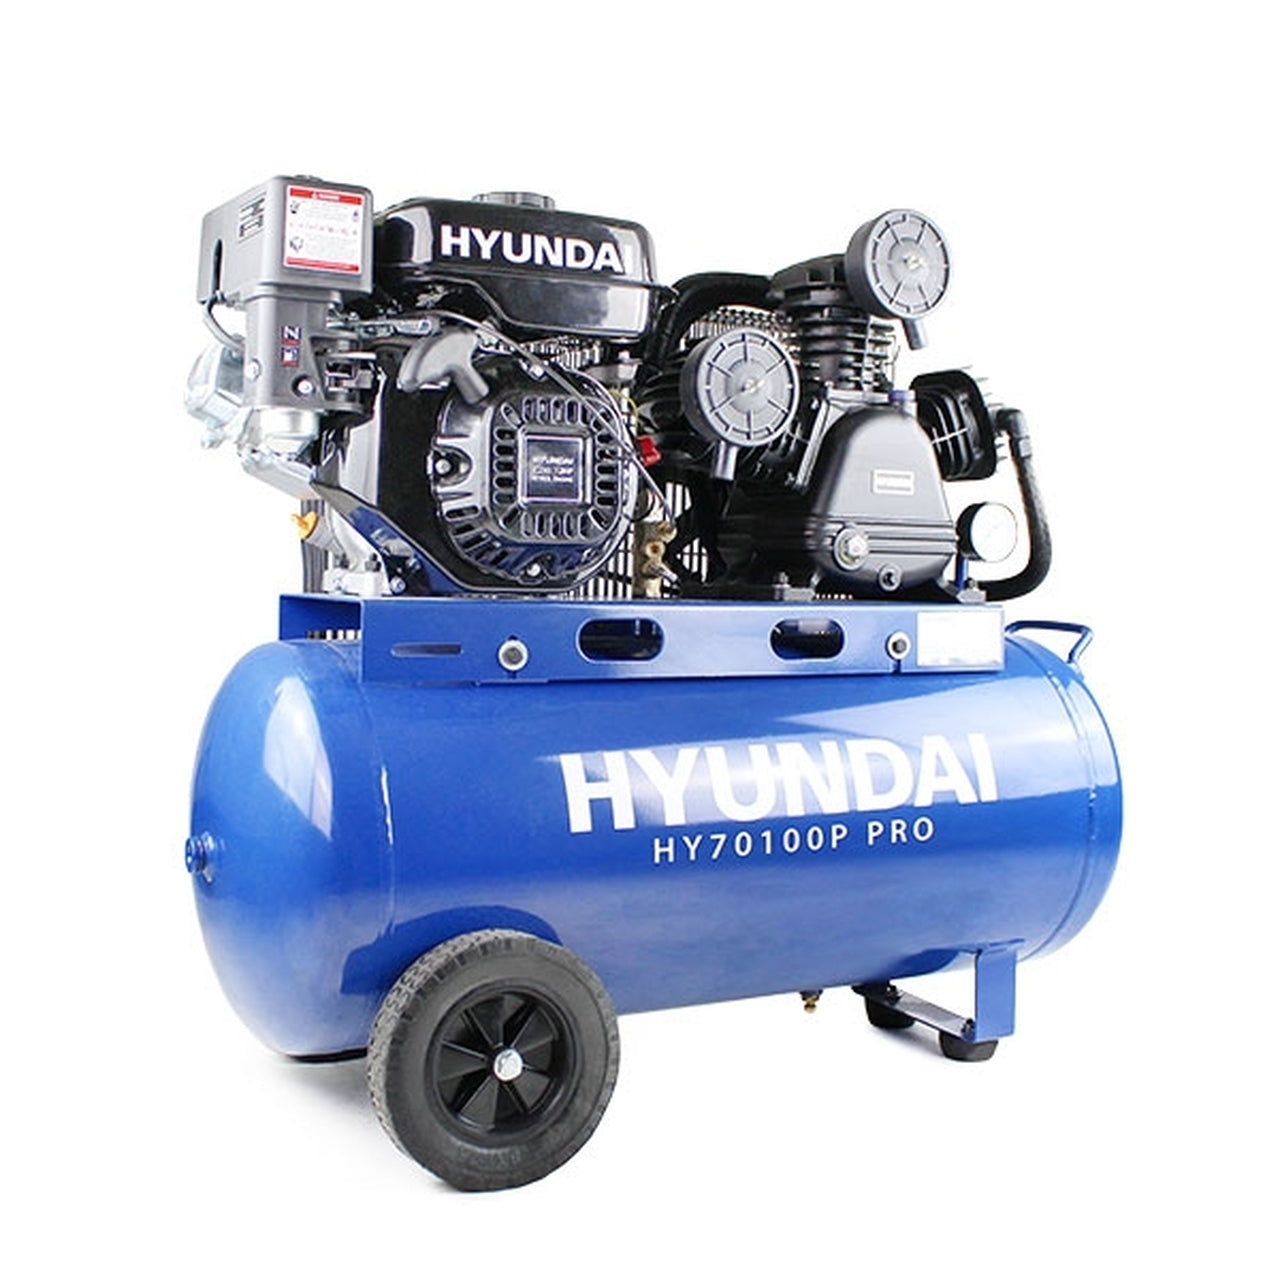 Hyundai HY70100P 90 Litre Petrol Air Compressor, 10.7CFM/145psi - 7hp